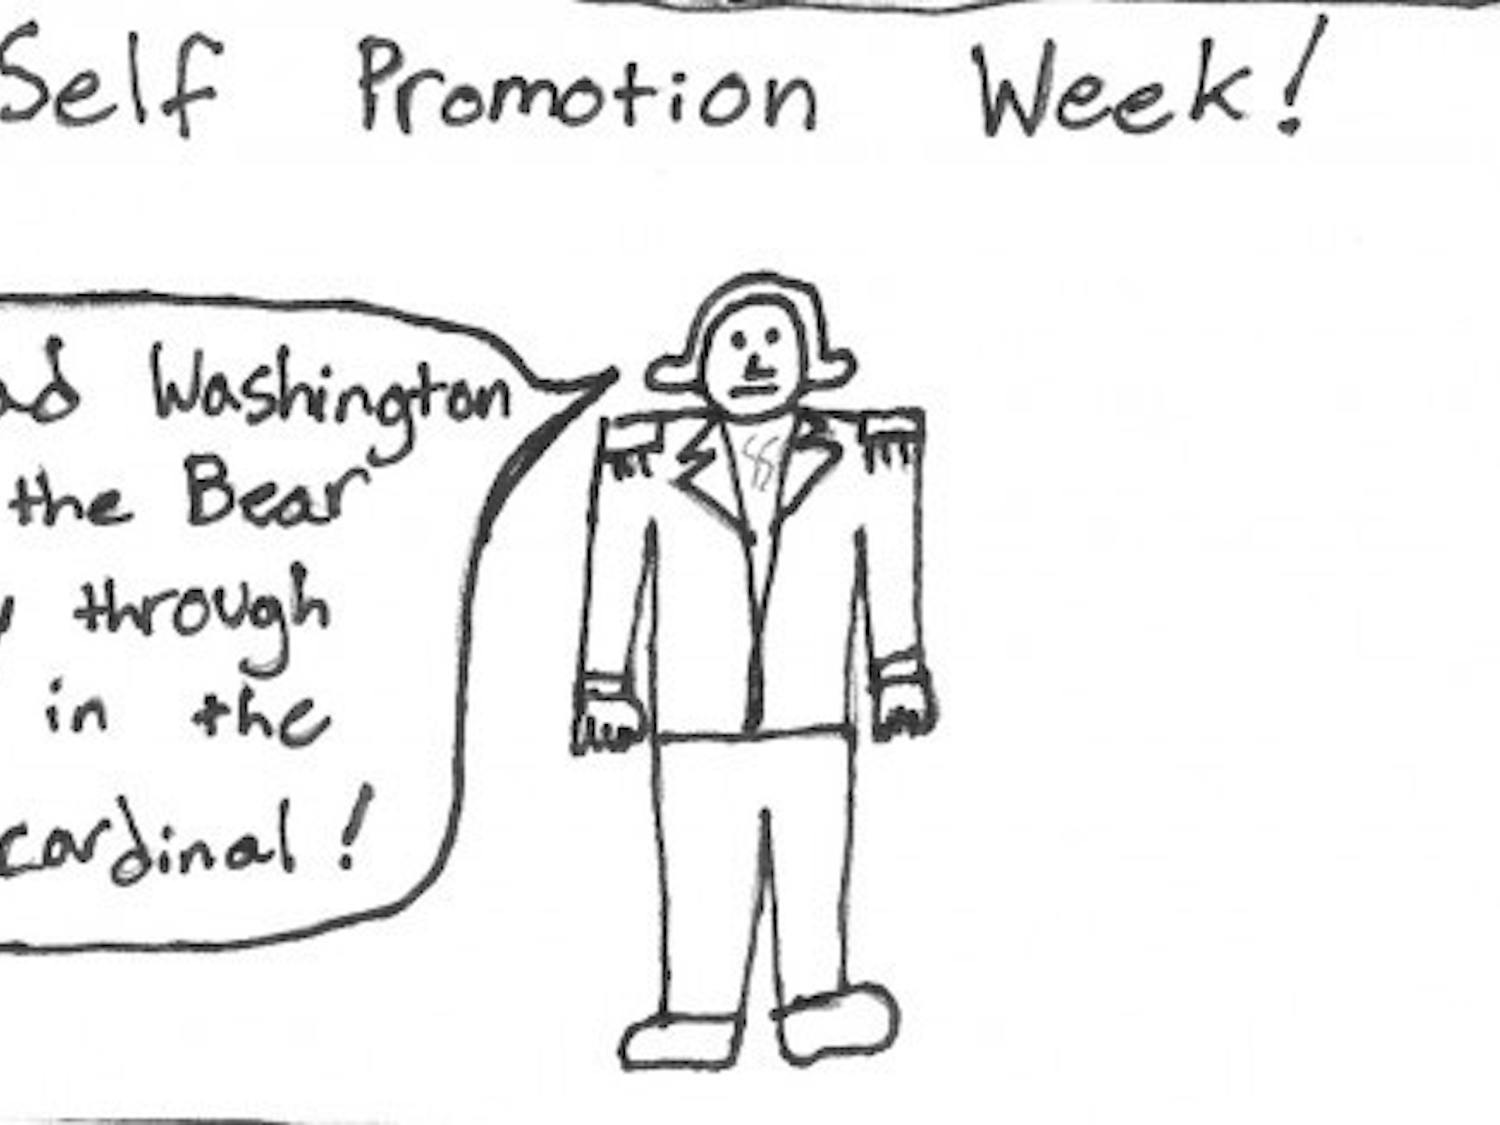 05/03/2010 - Washington and the Bear